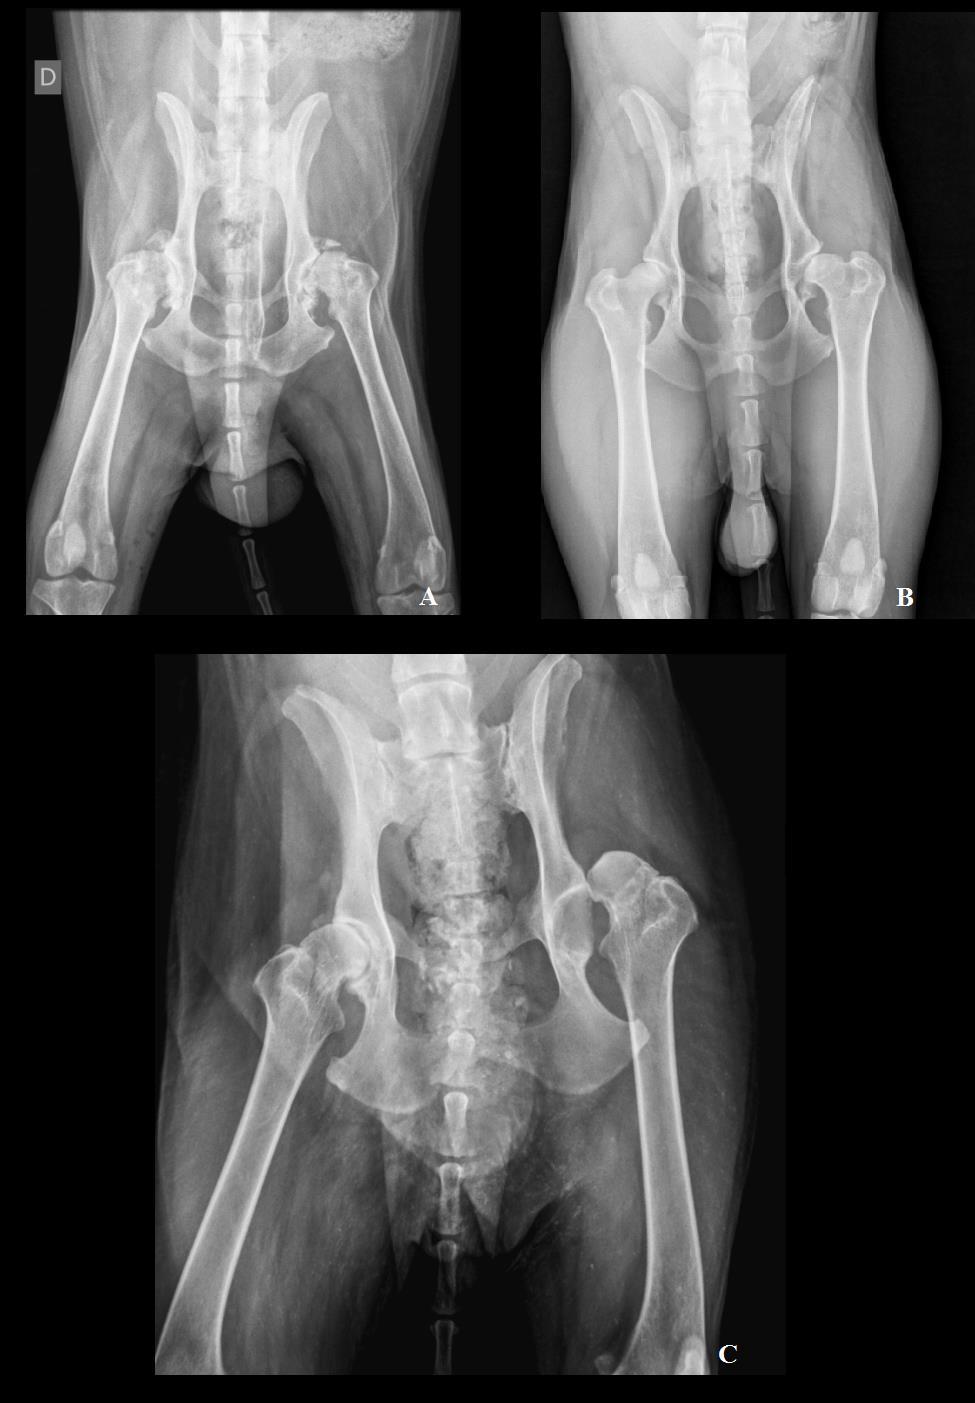 39 Figura 7 Radiografia ventrodorsal de cão evidenciando displasia coxofemoral bilateral grave (A), posicionado para o método radiográfico convencional.